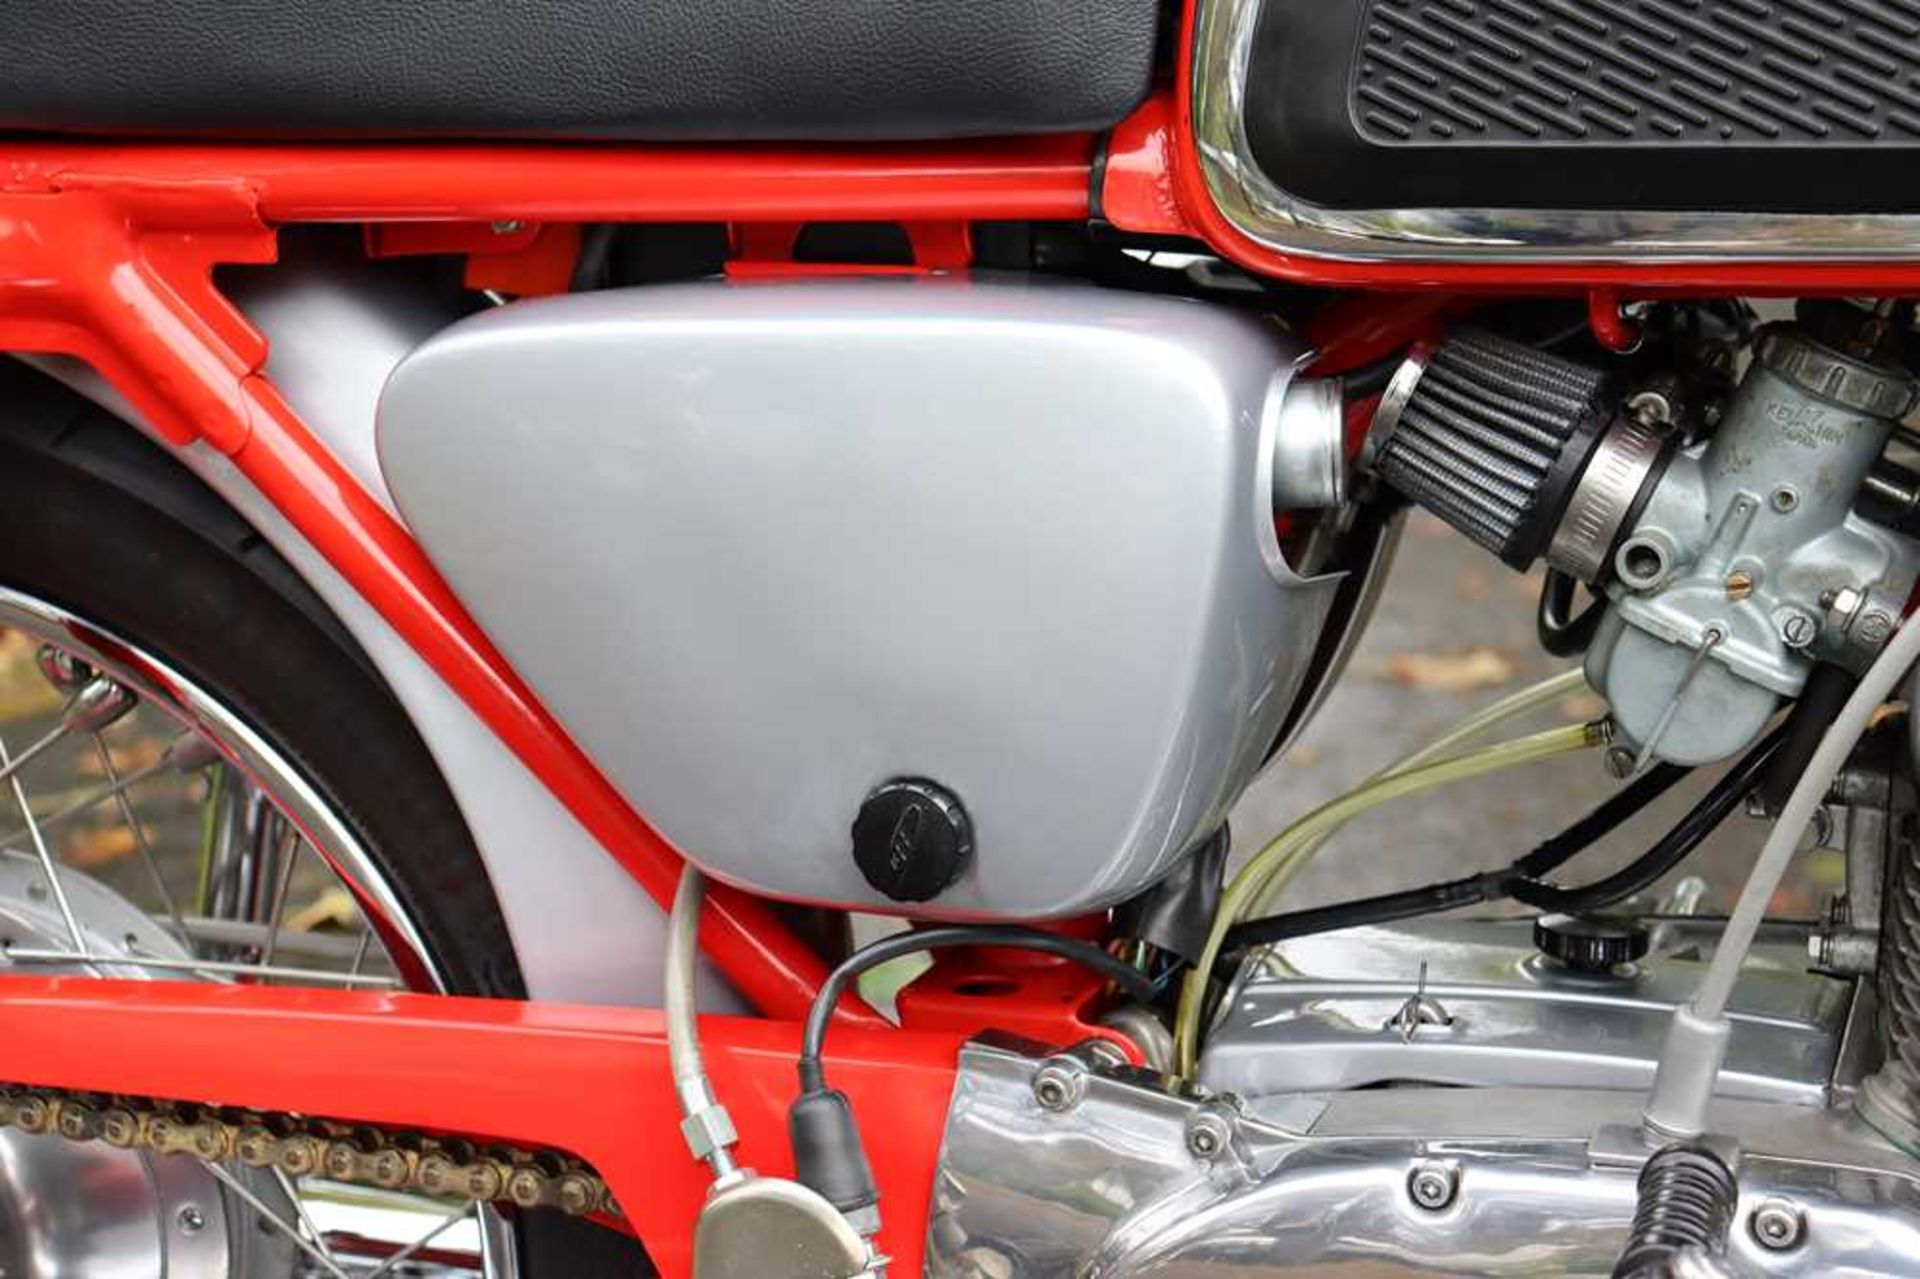 1966 Honda CB77 Restored to a high standard - Image 20 of 65